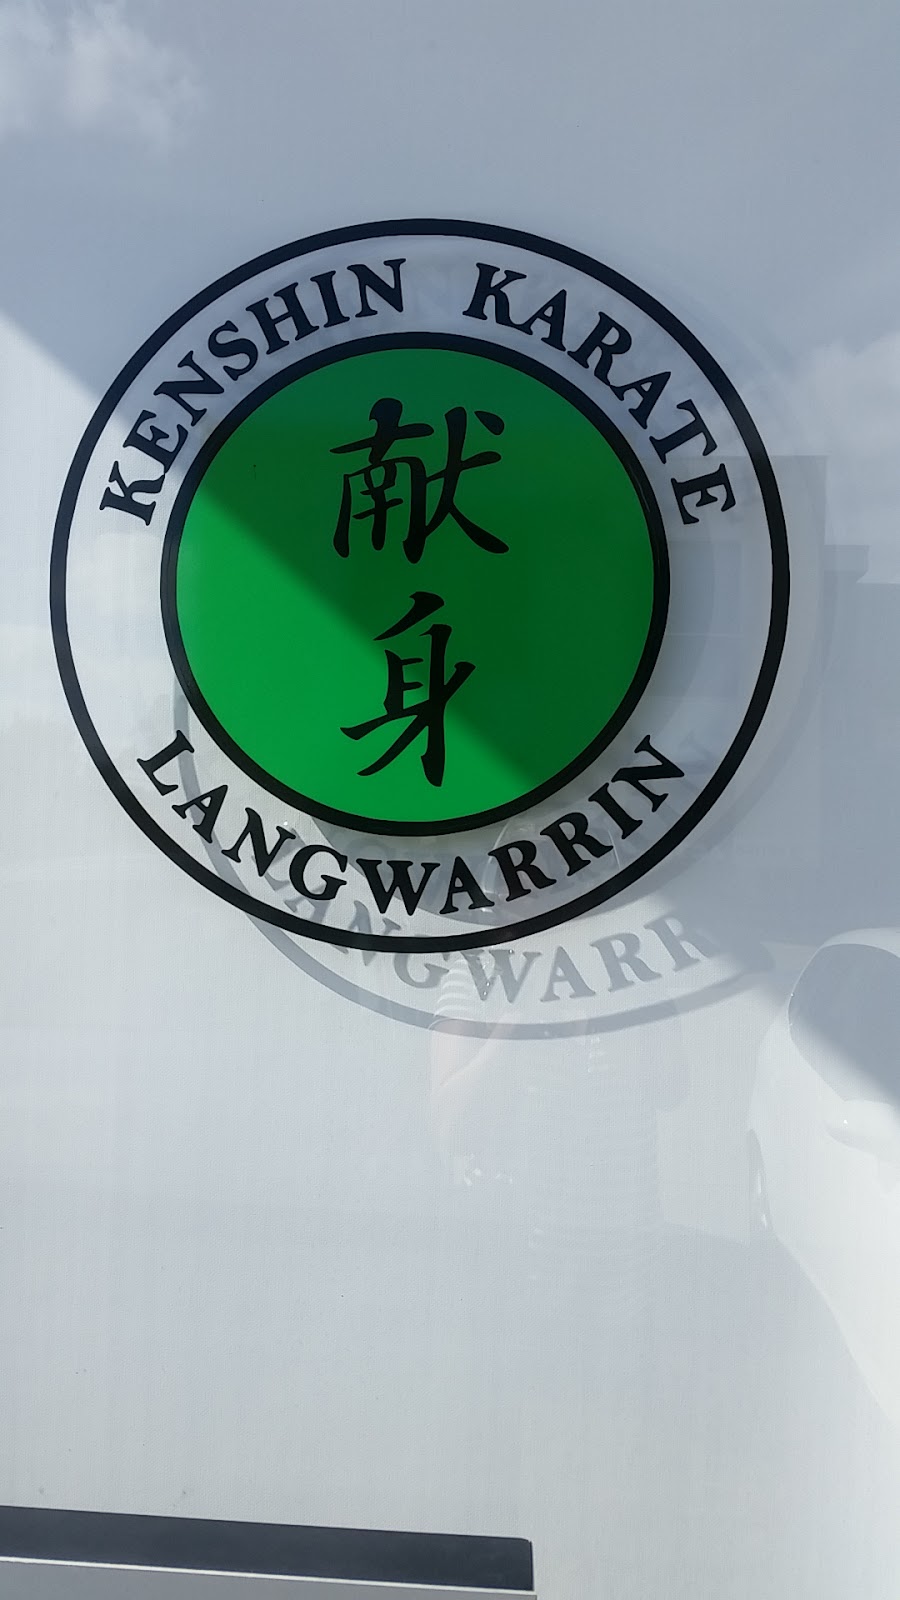 Kenshin Karate Langwarrin | health | 397 - 401 McClelland Dr, Langwarrin VIC 3910, Australia | 0438713819 OR +61 438 713 819